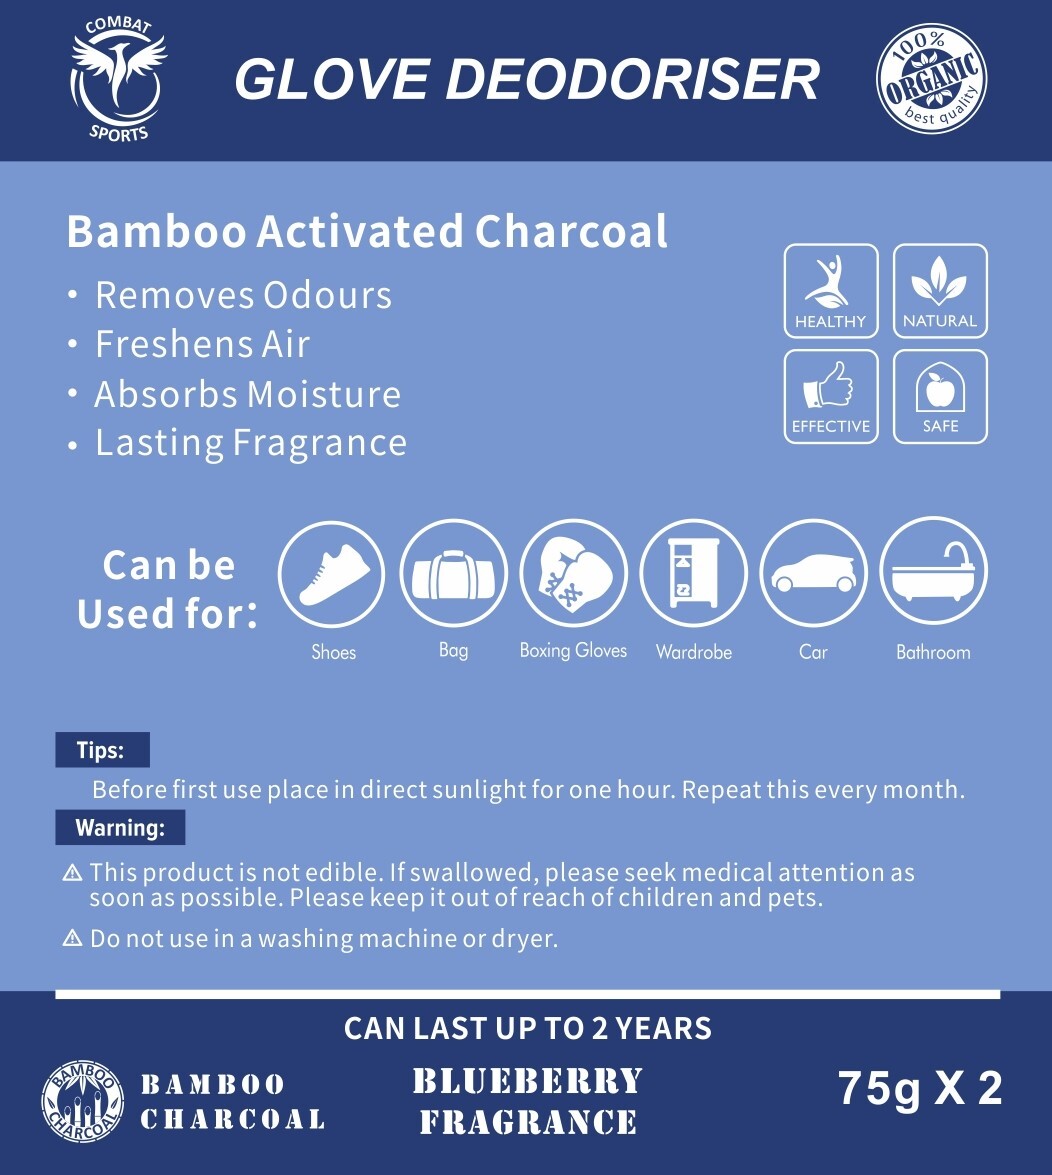 CSG - Glove Deodorisers - Blueberry